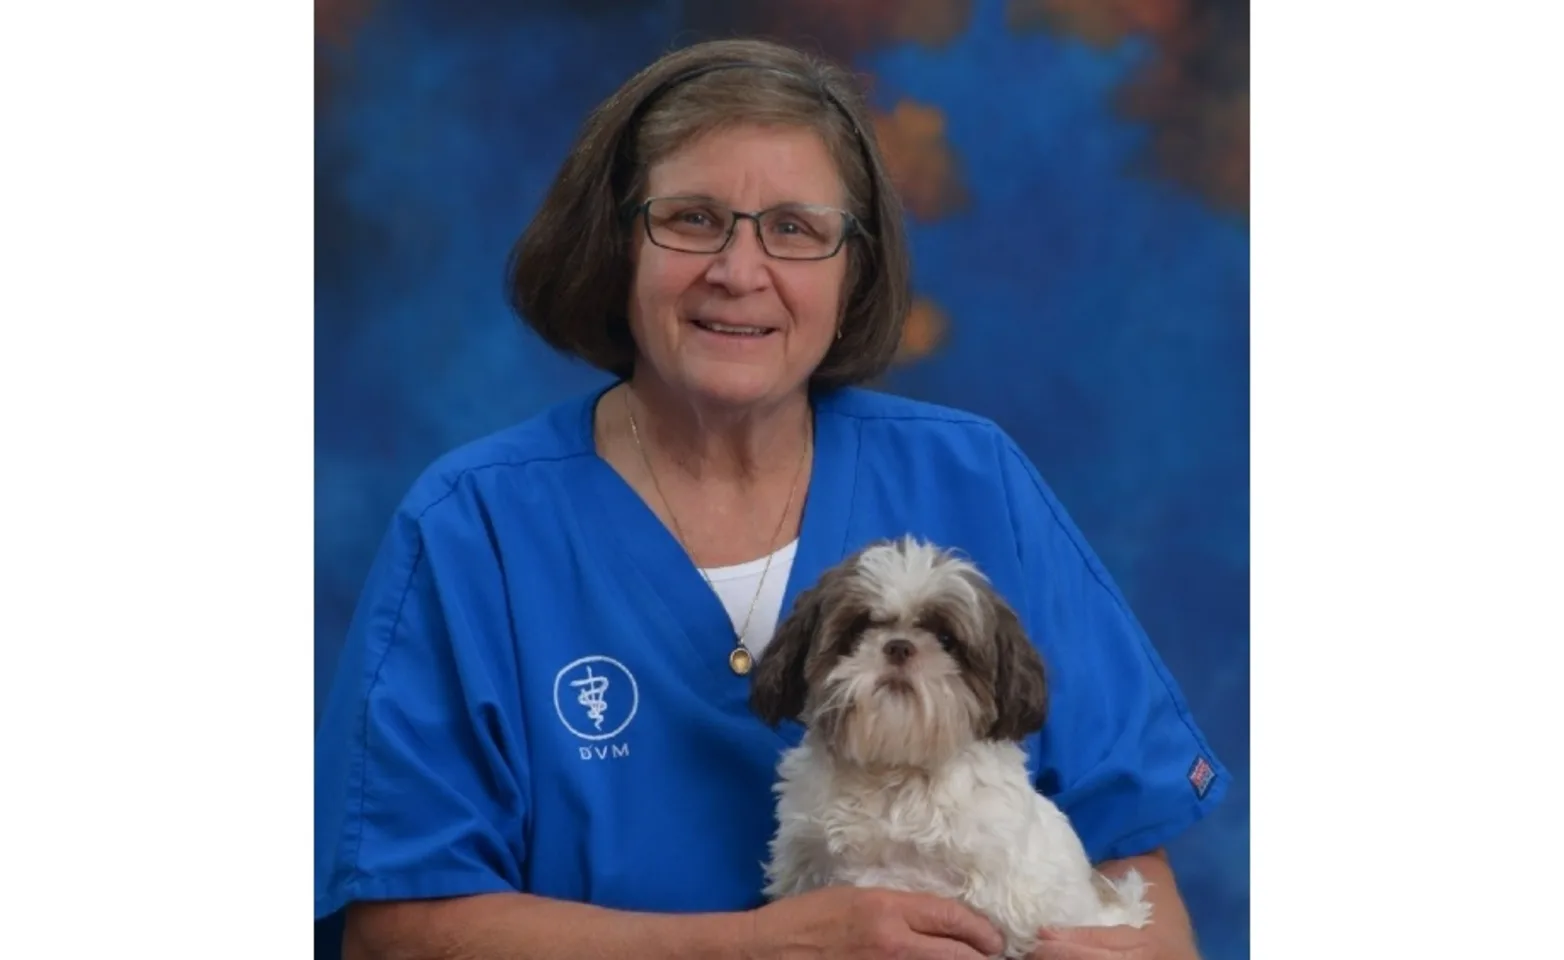 Dr. Jill holding a dog